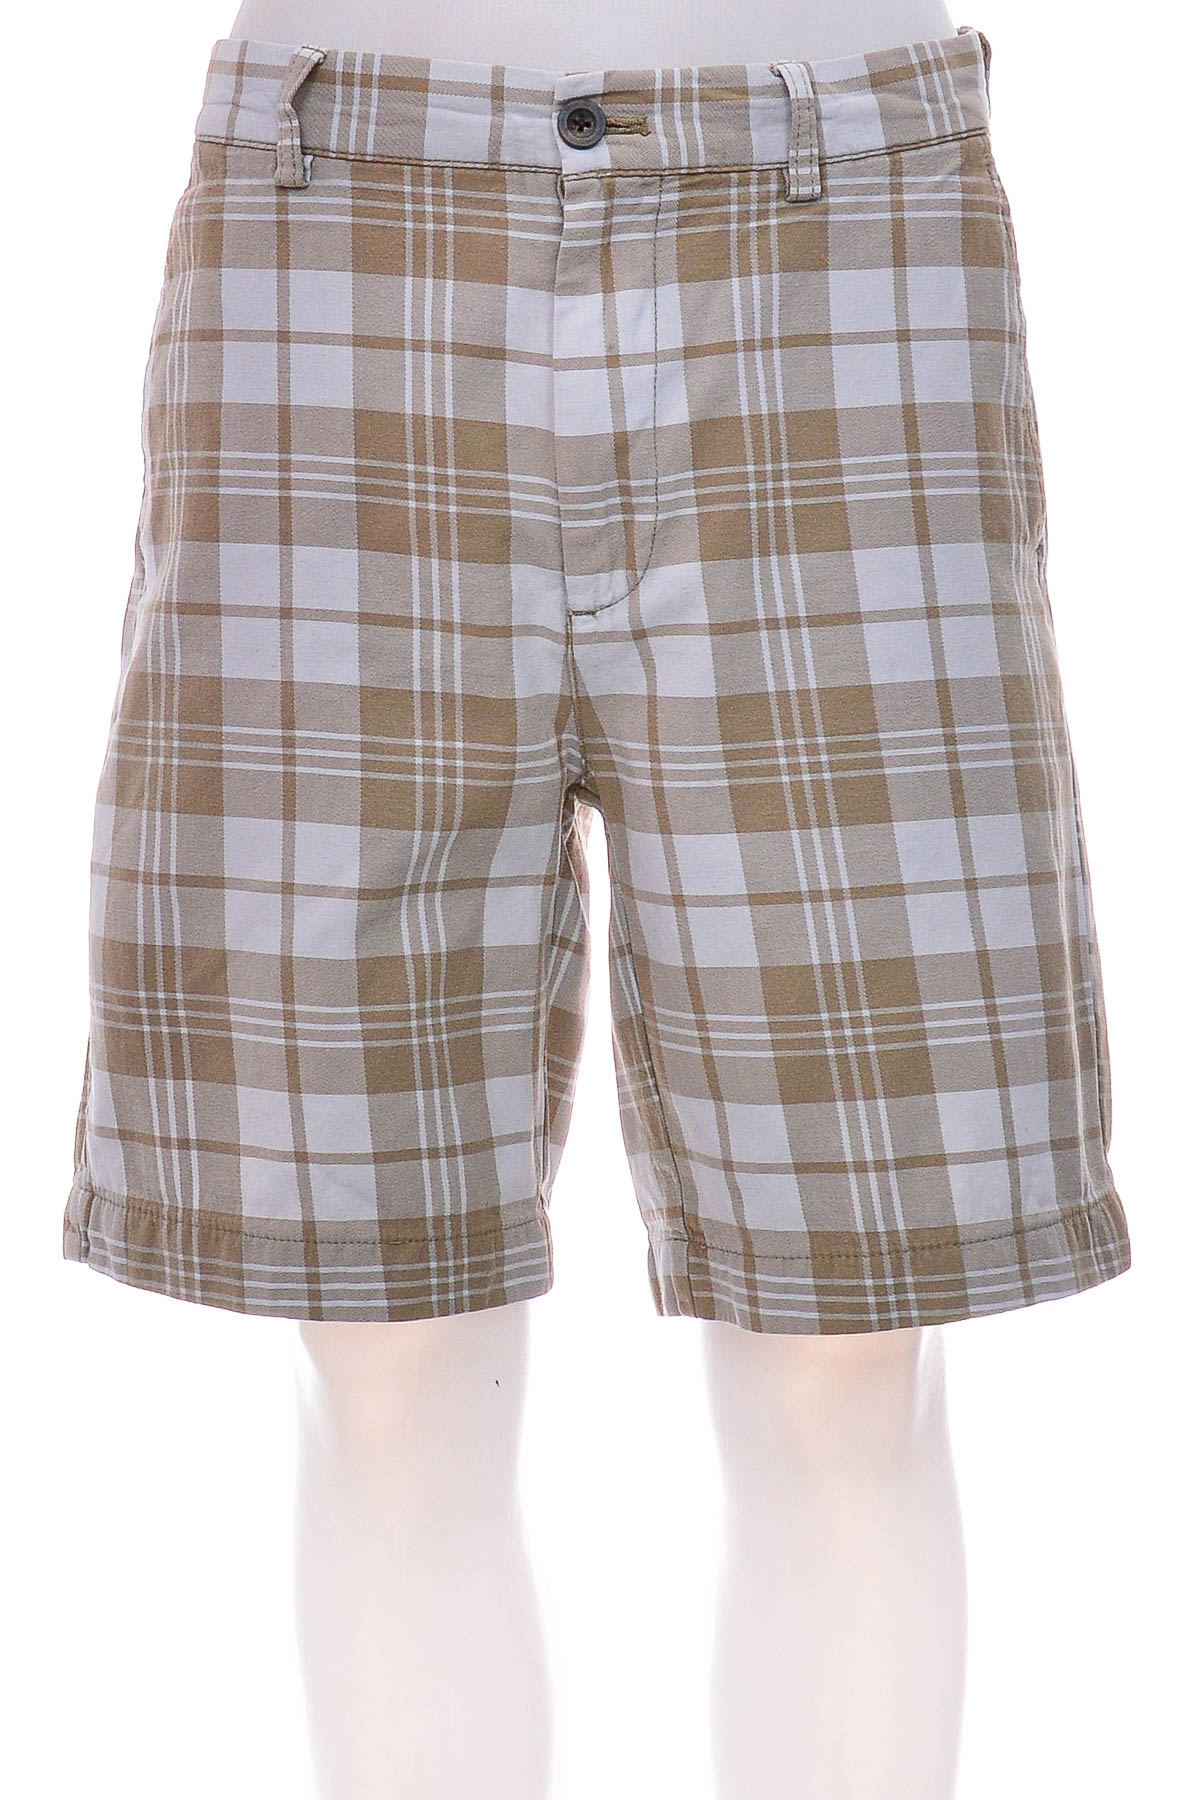 Men's shorts - Amazon Essentials - 0